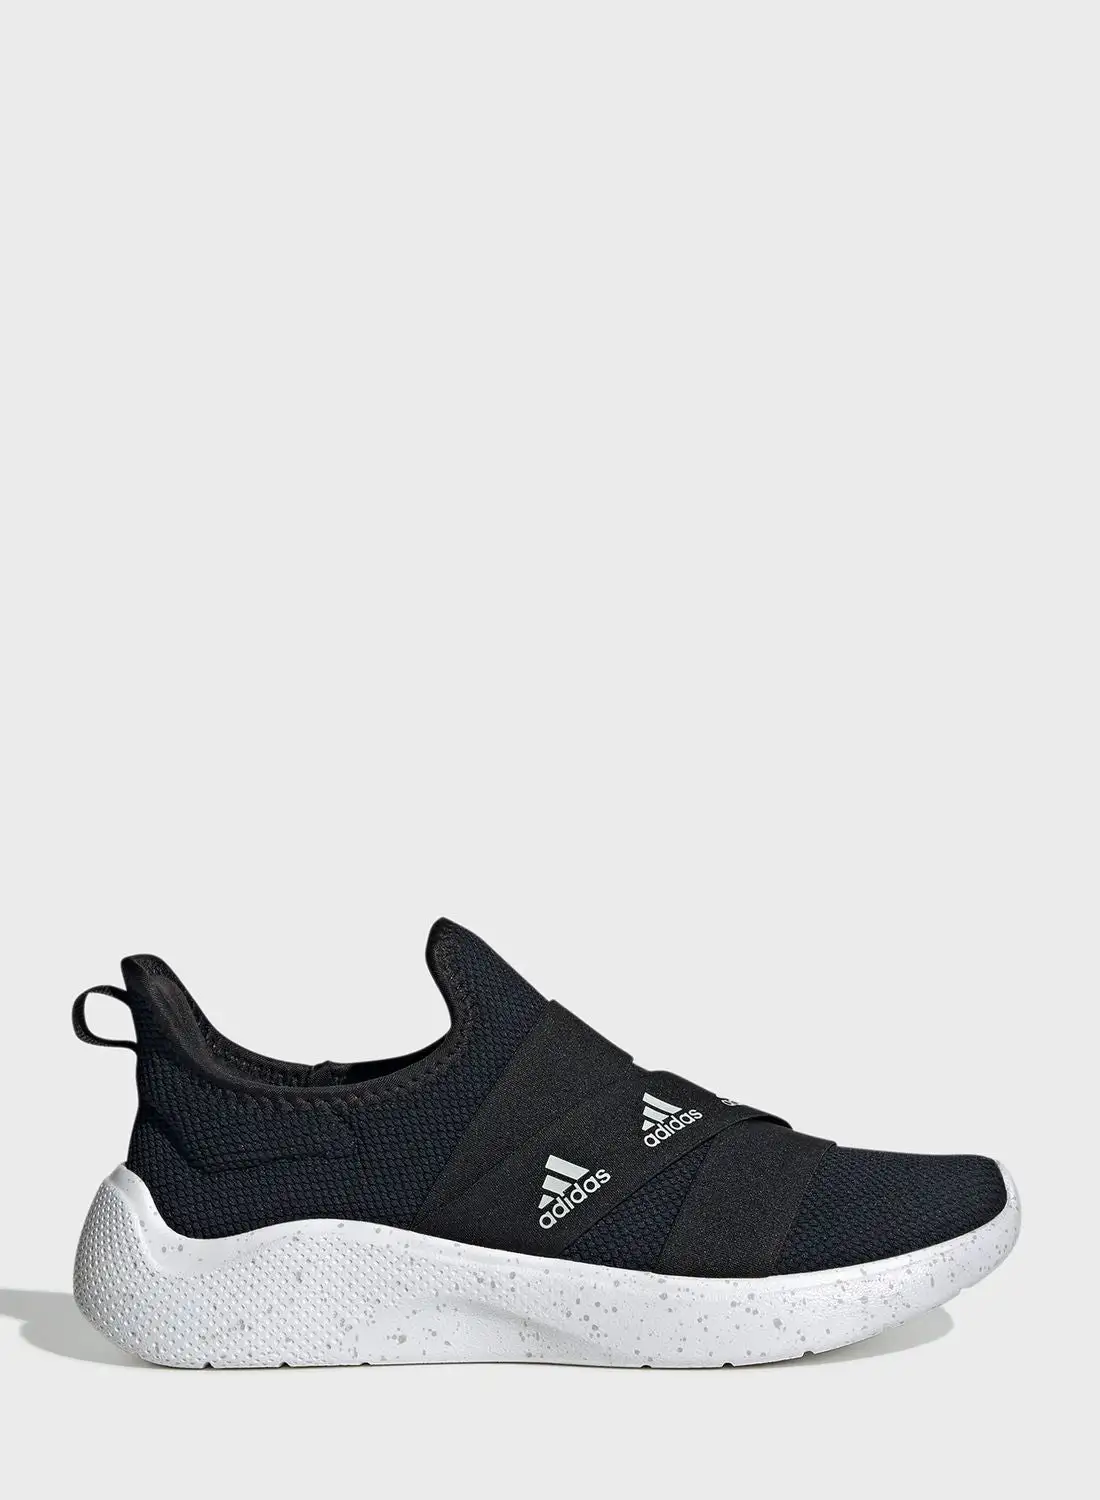 Adidas Puremotion Adapt Sp Shoes